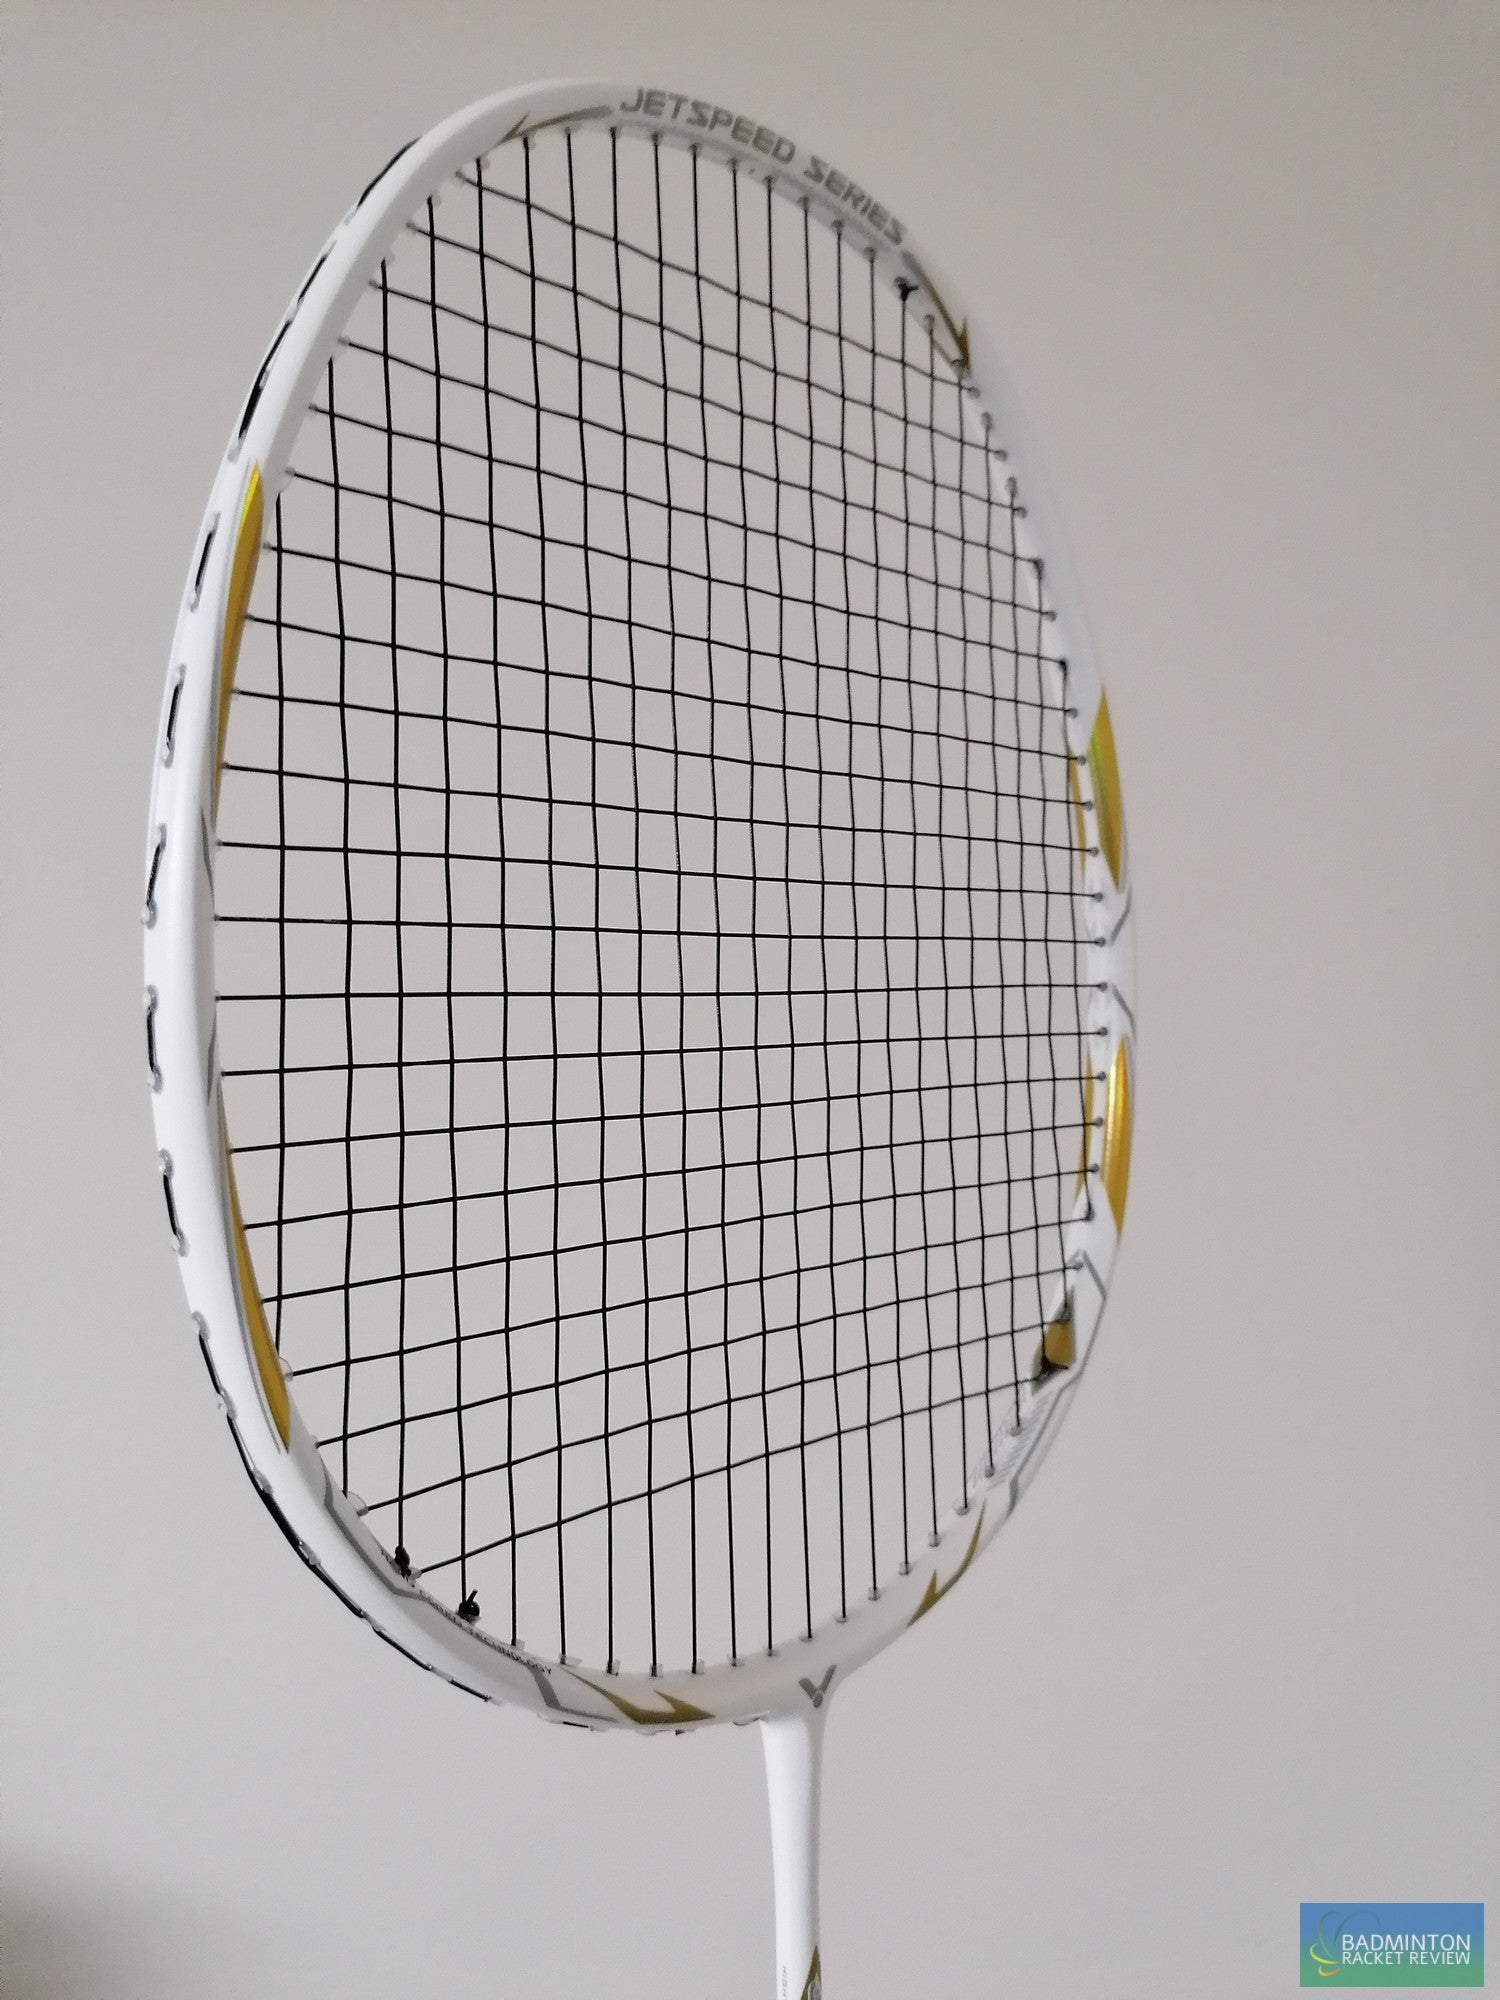 Victor Jetspeed ST1 4u Badminton Racket | badminton racket review